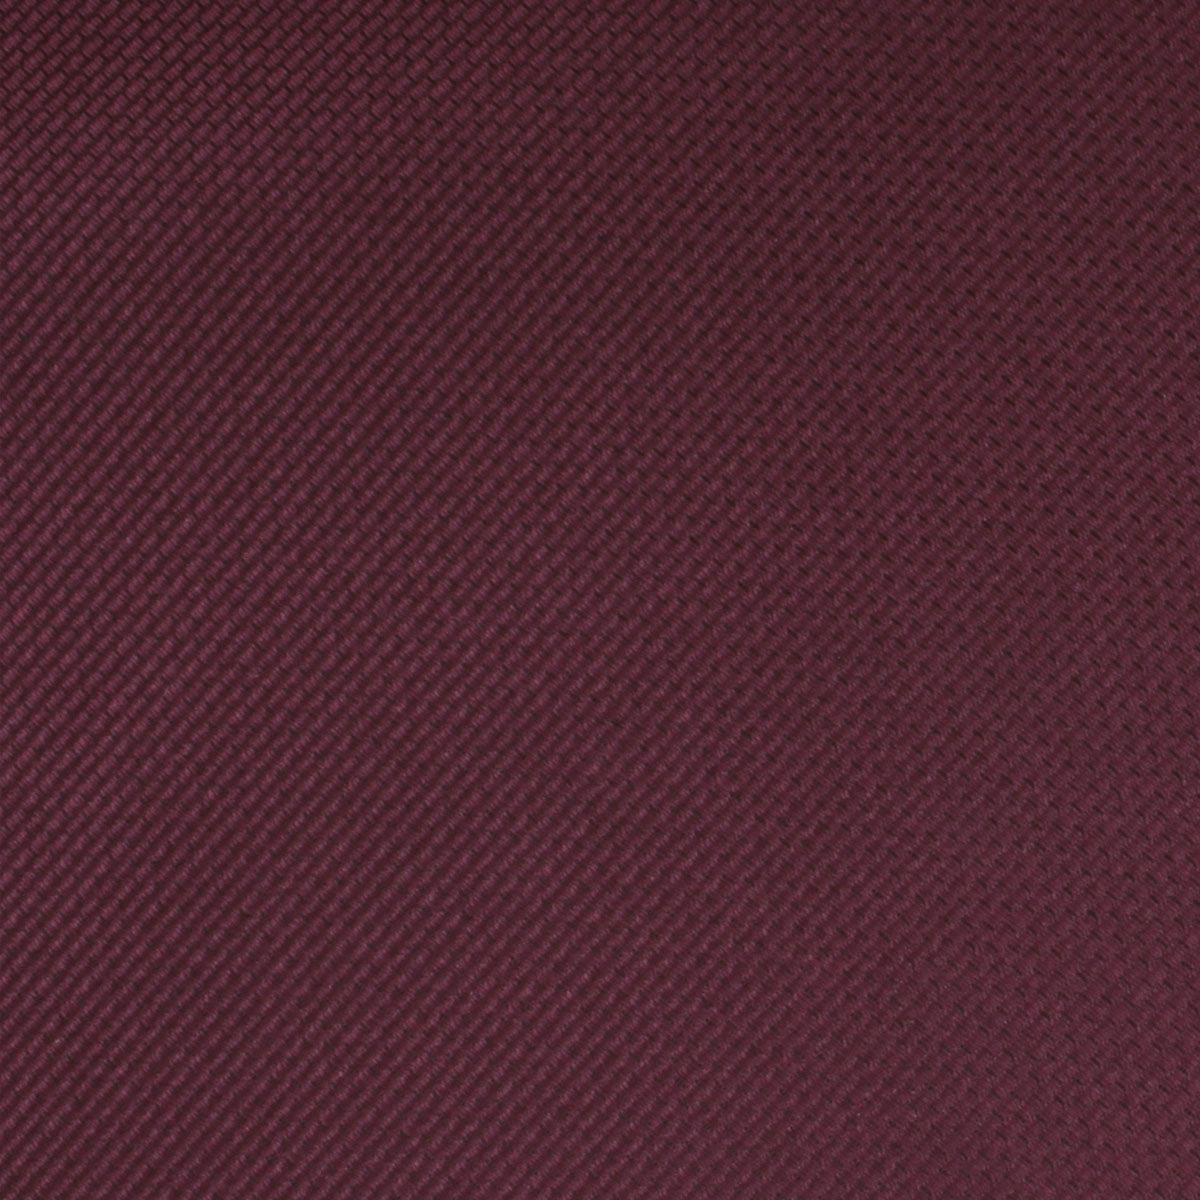 Garnet Wine Burgundy Weave Bow Tie Fabric